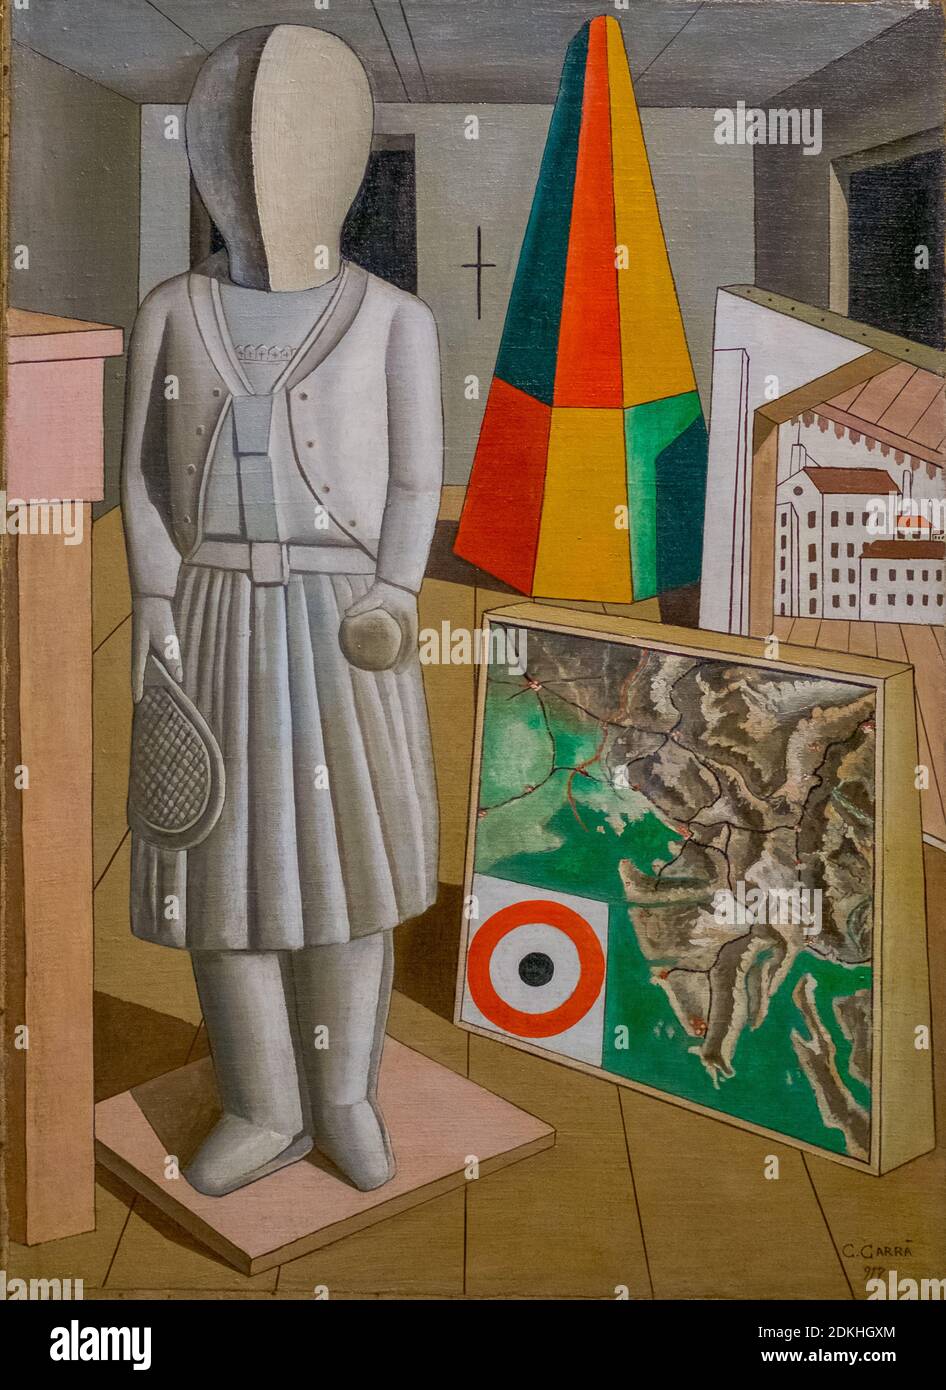 Carlo Carrà, die metaphysische Muse (La musa metafica) 1917, Öl auf Leinwand. Pinacoteca di Brera, Mailand, Italien. Stockfoto